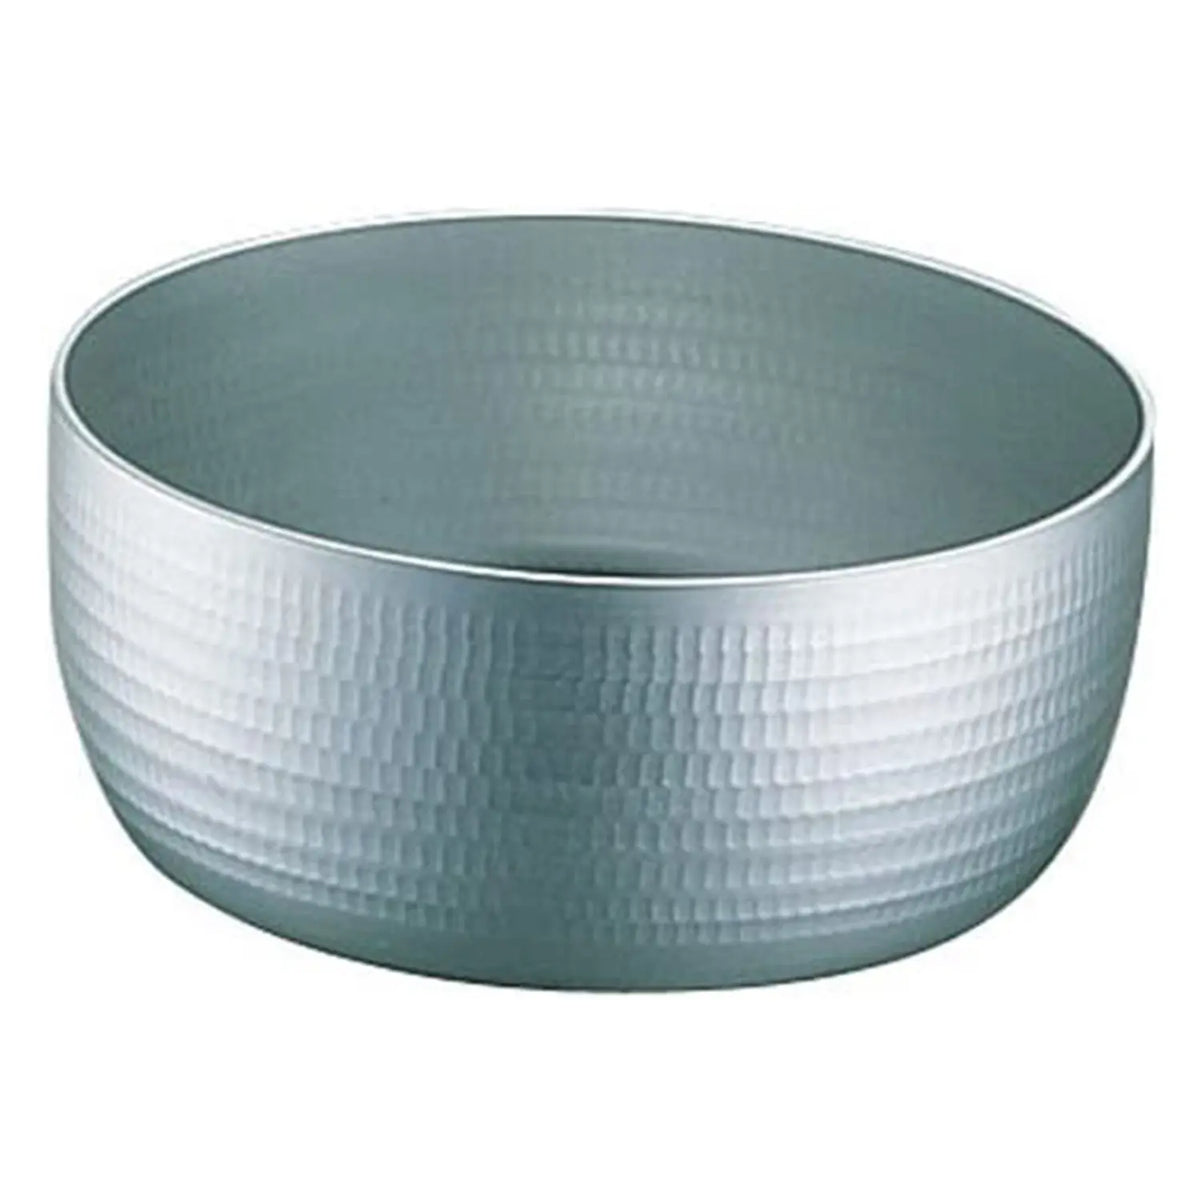 IKD ecoclean ELETEC Aluminium Yattoko Pot